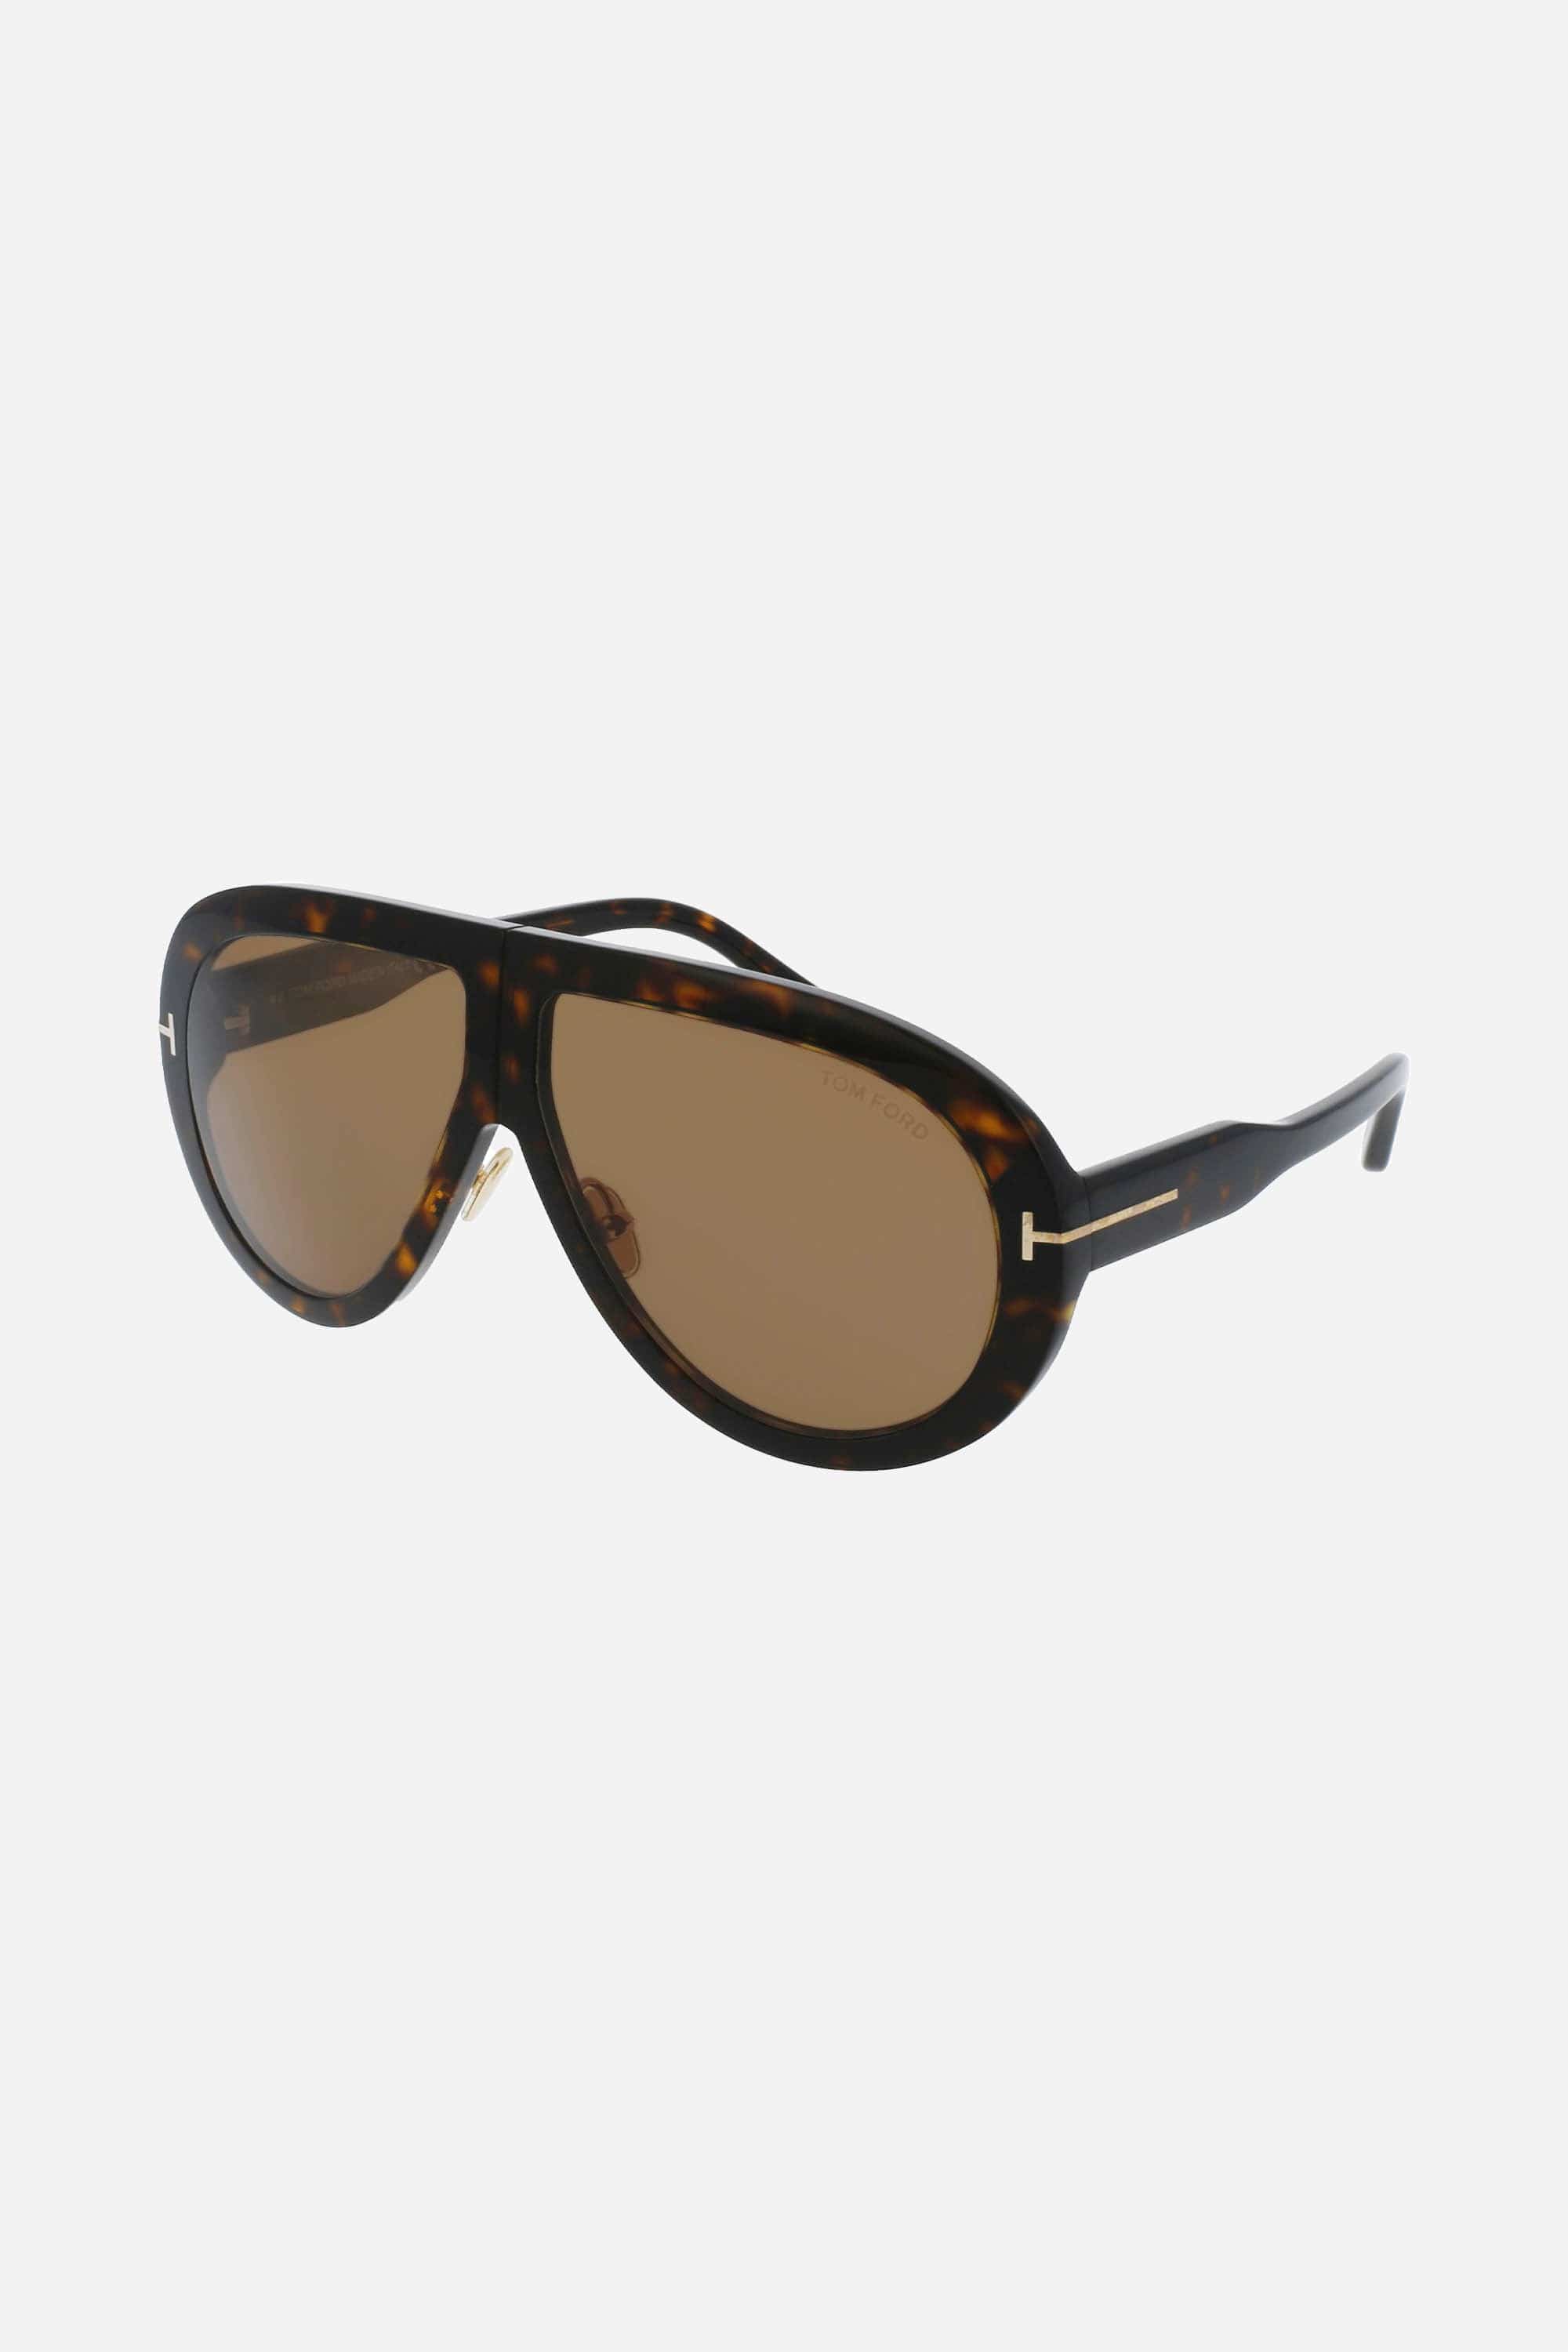 Tom Ford oversized pilot havana sunglasses - Eyewear Club